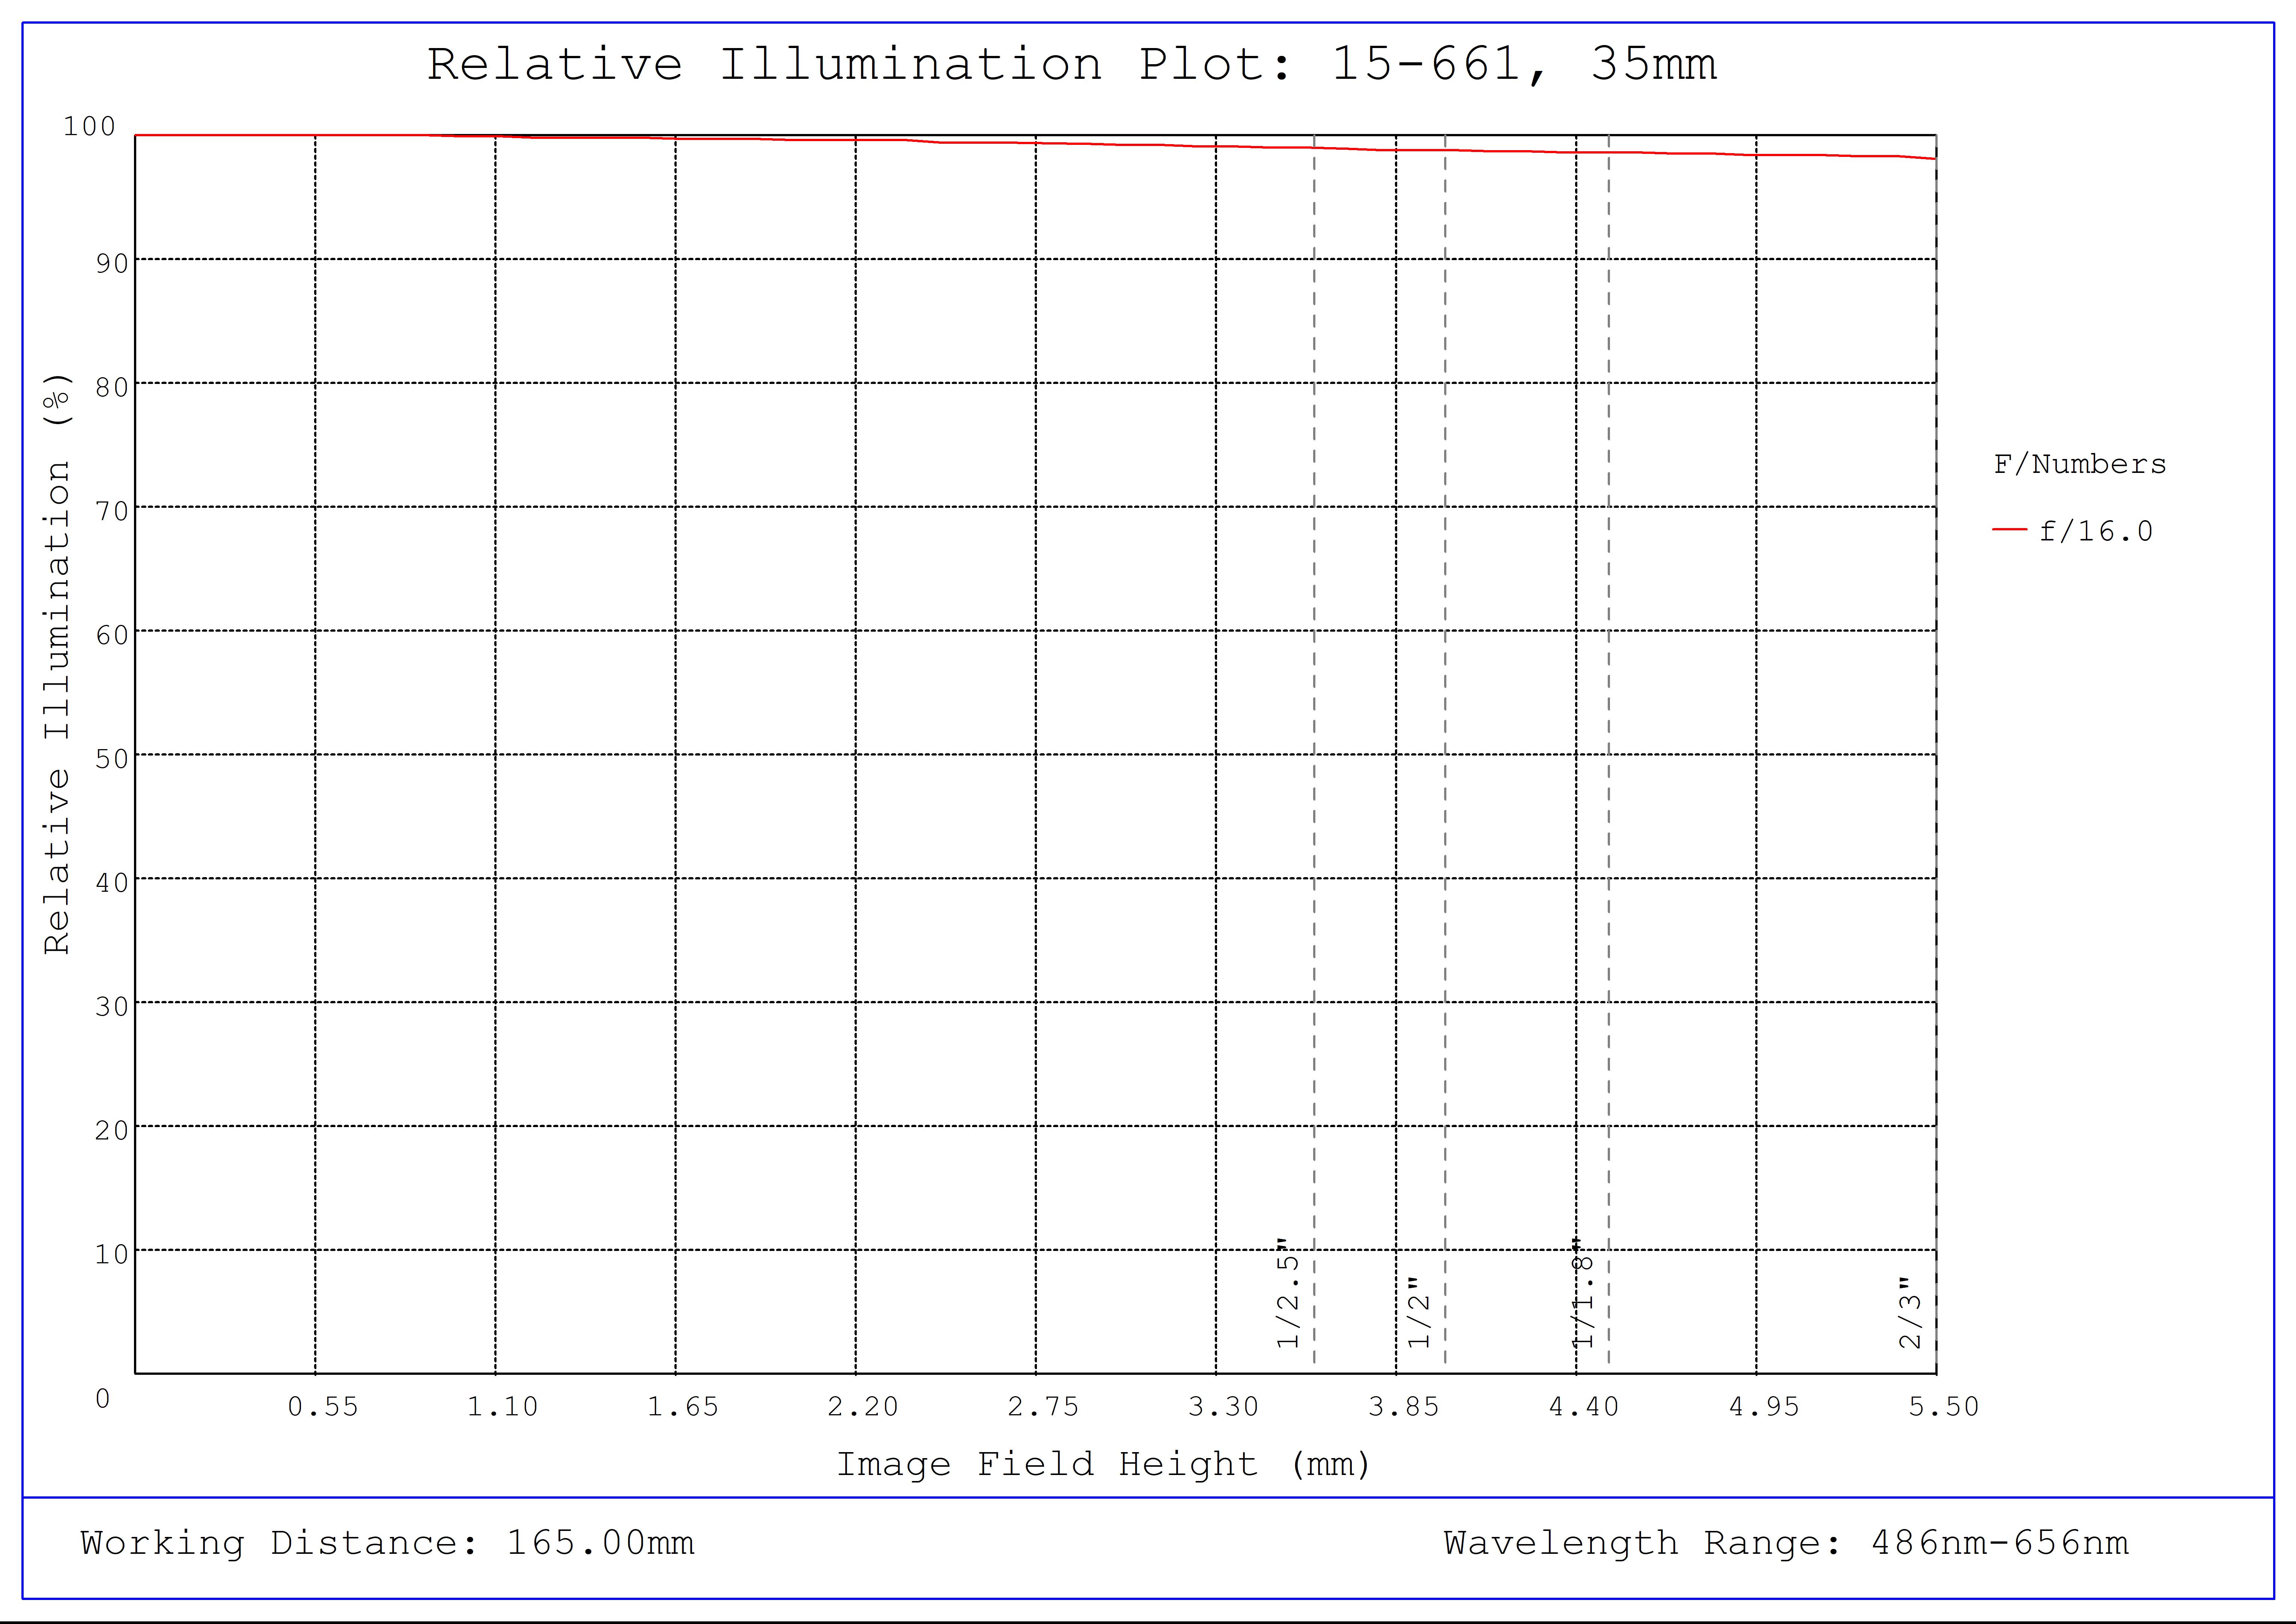 #15-661, 35mm, f/16 Cw Series Fixed Focal Length Lens, Relative Illumination Plot